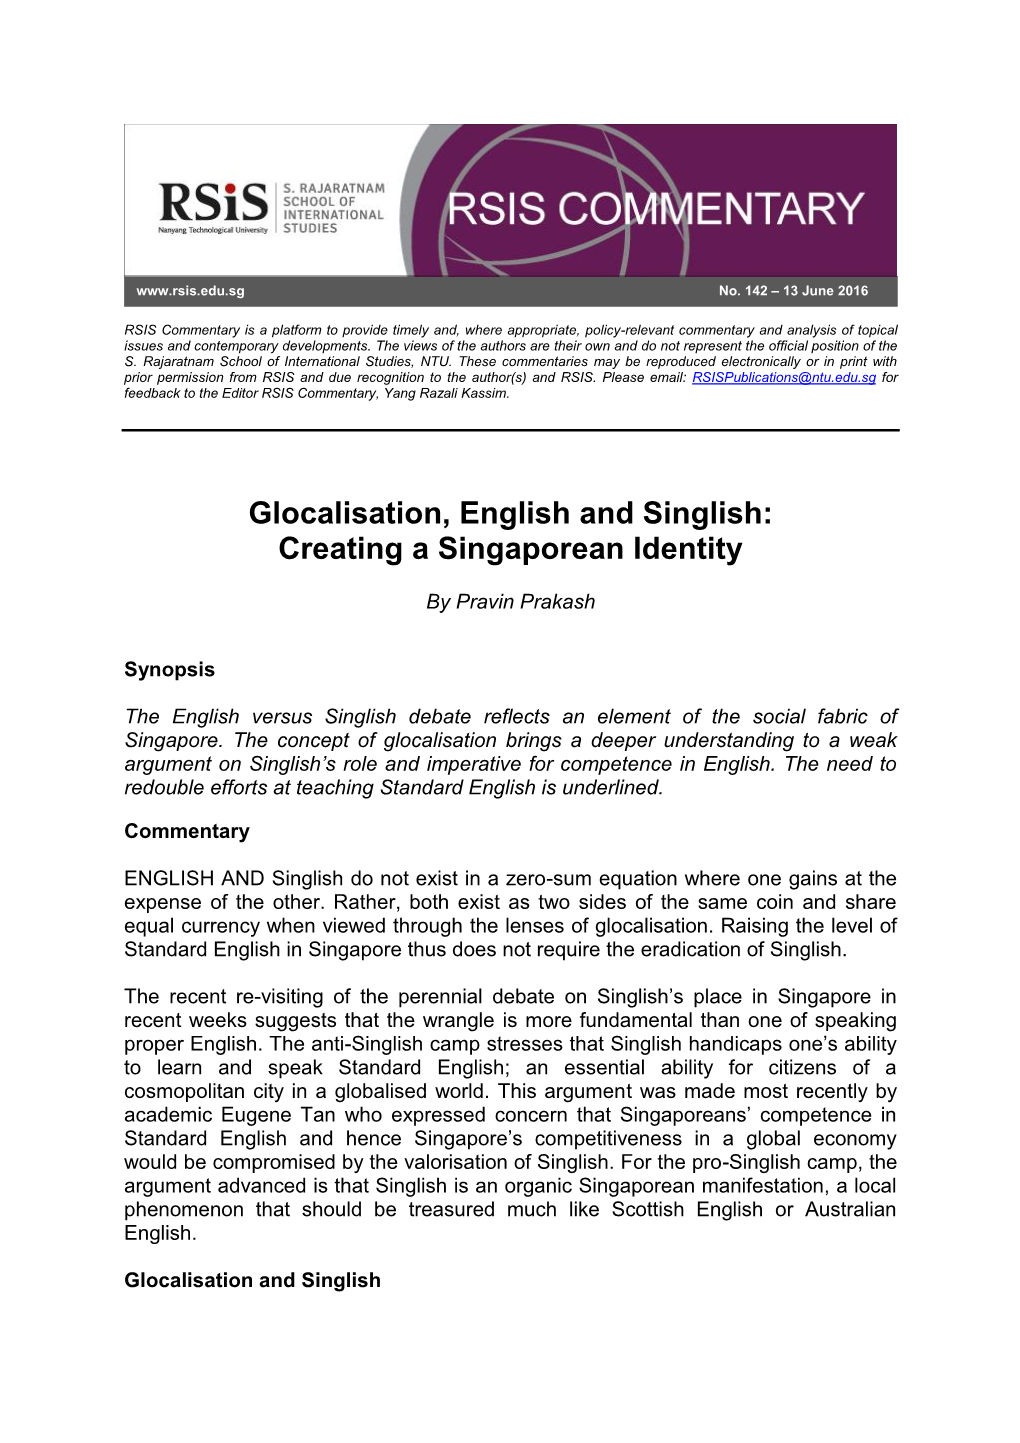 Glocalisation, English and Singlish: Creating a Singaporean Identity